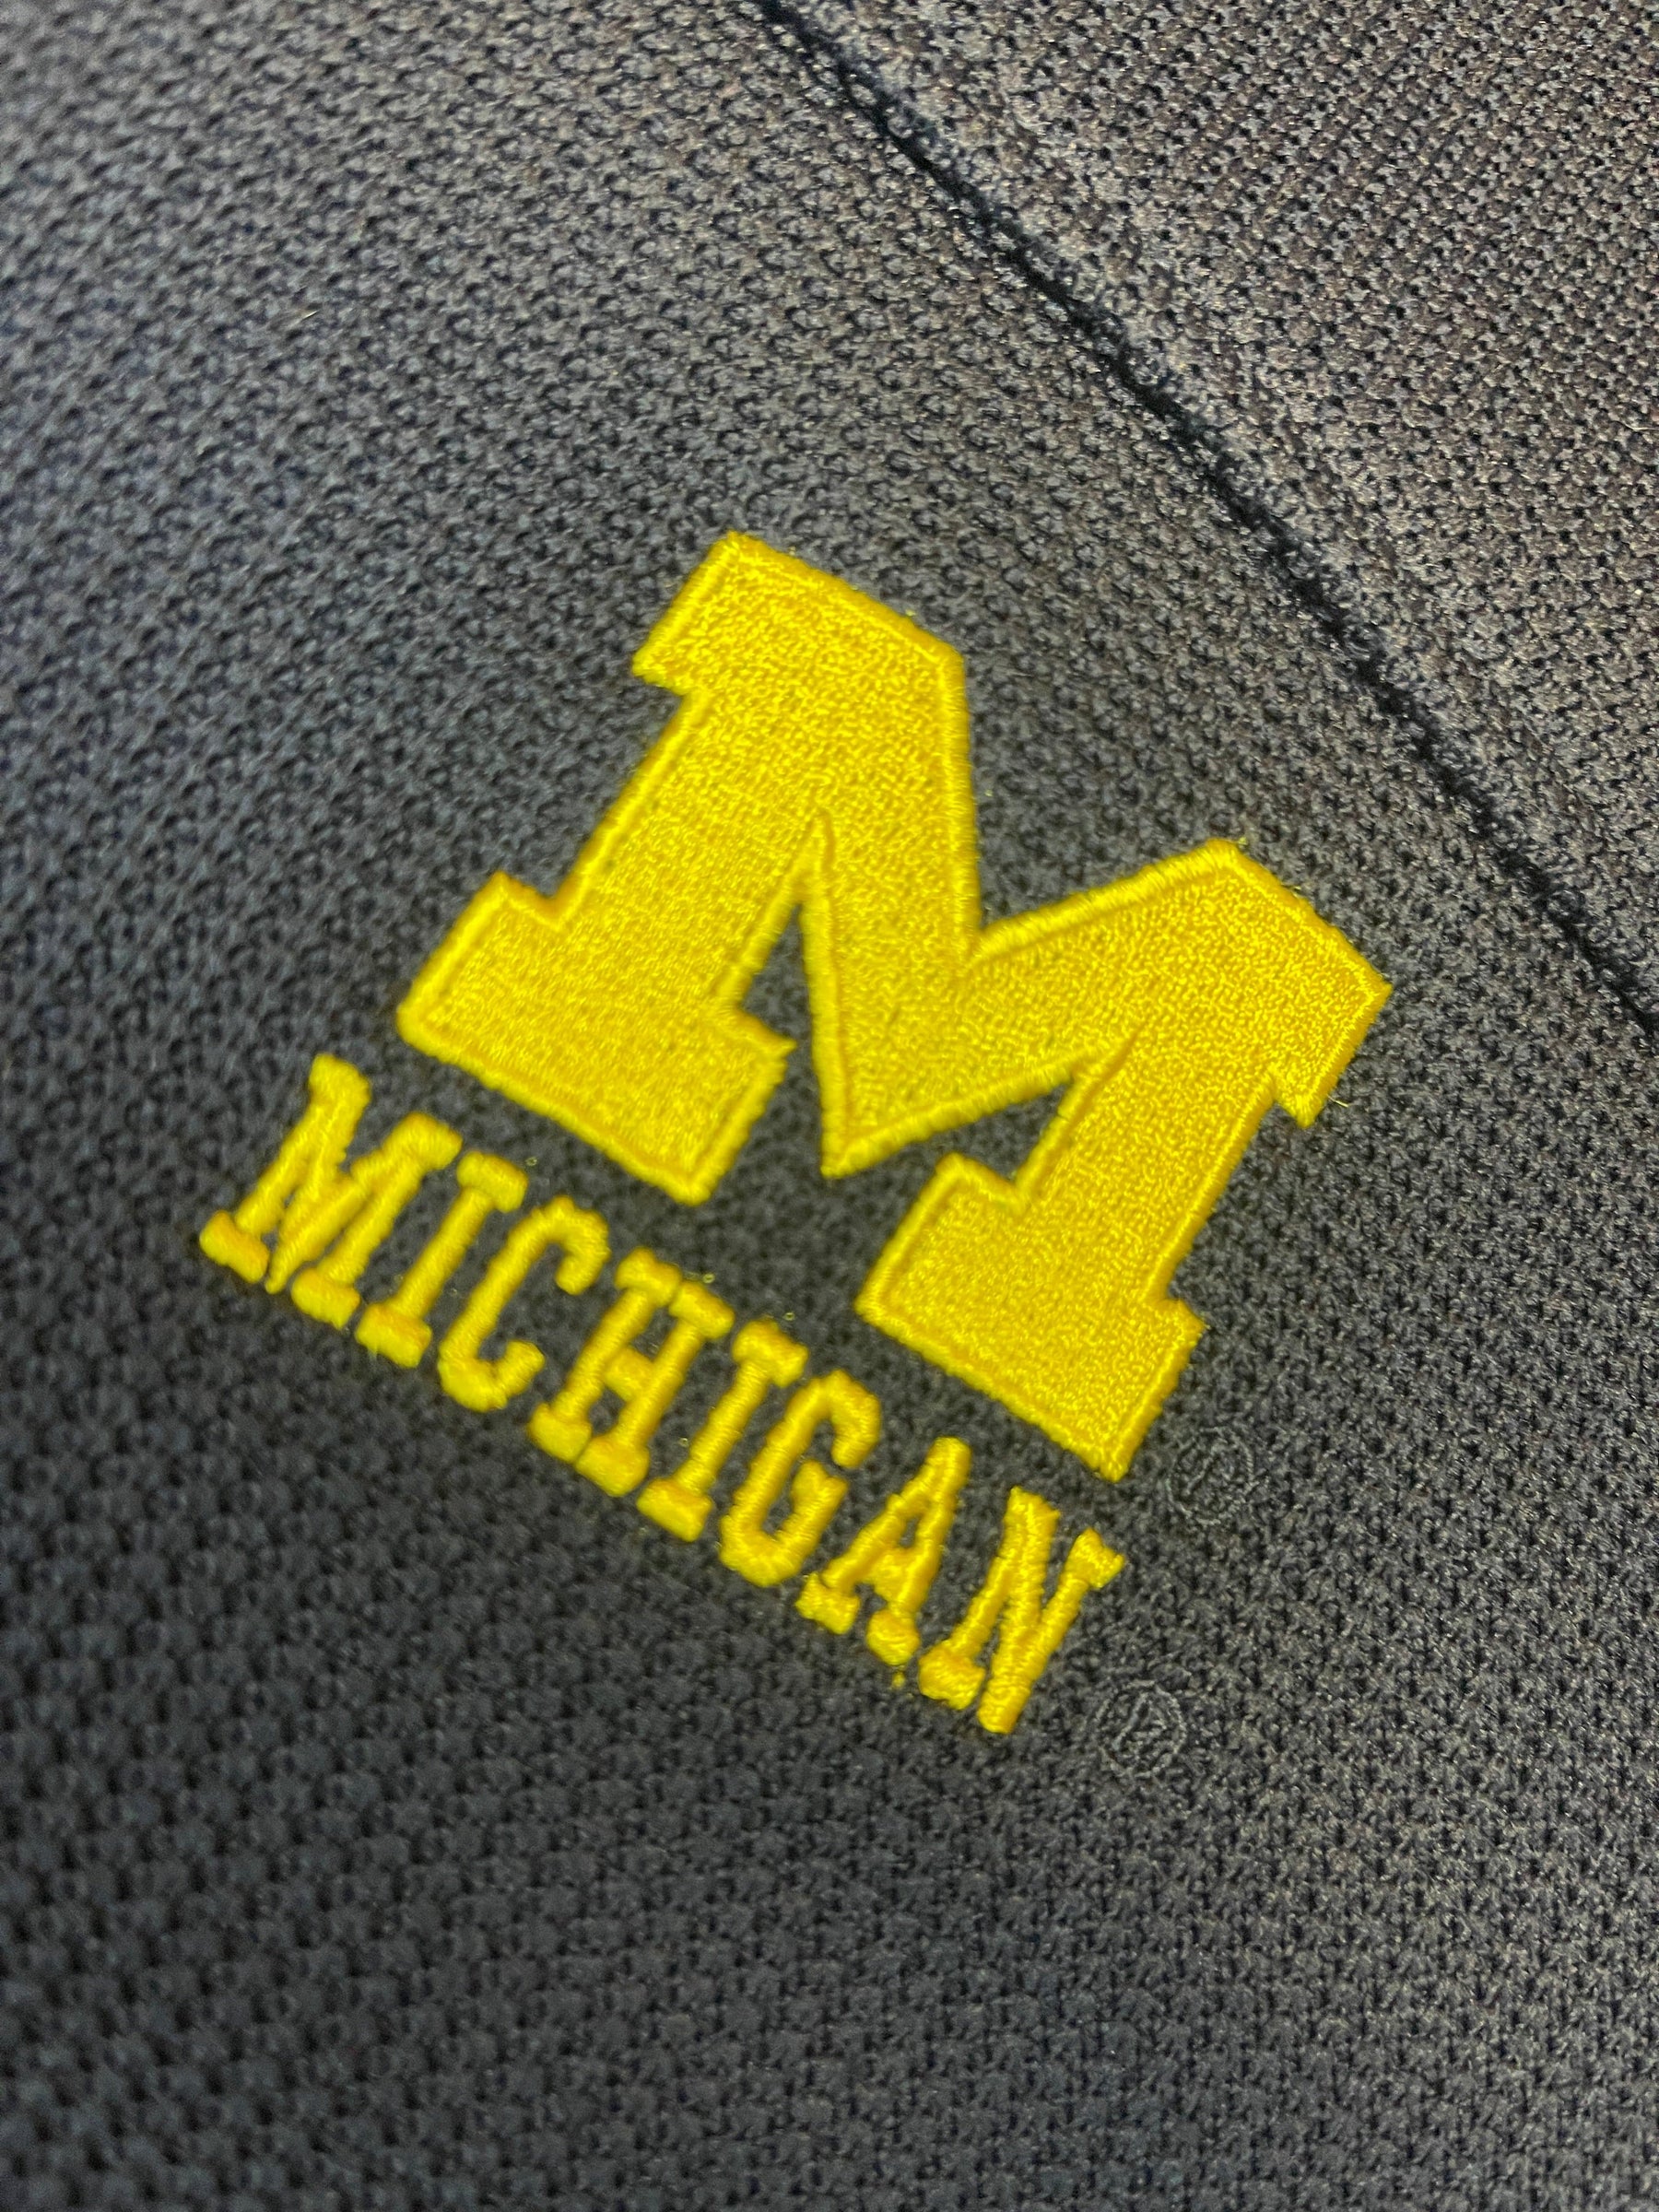 NCAA Michigan Wolverines Textured 1/4 Zip Pullover Jacket Men's X-Large